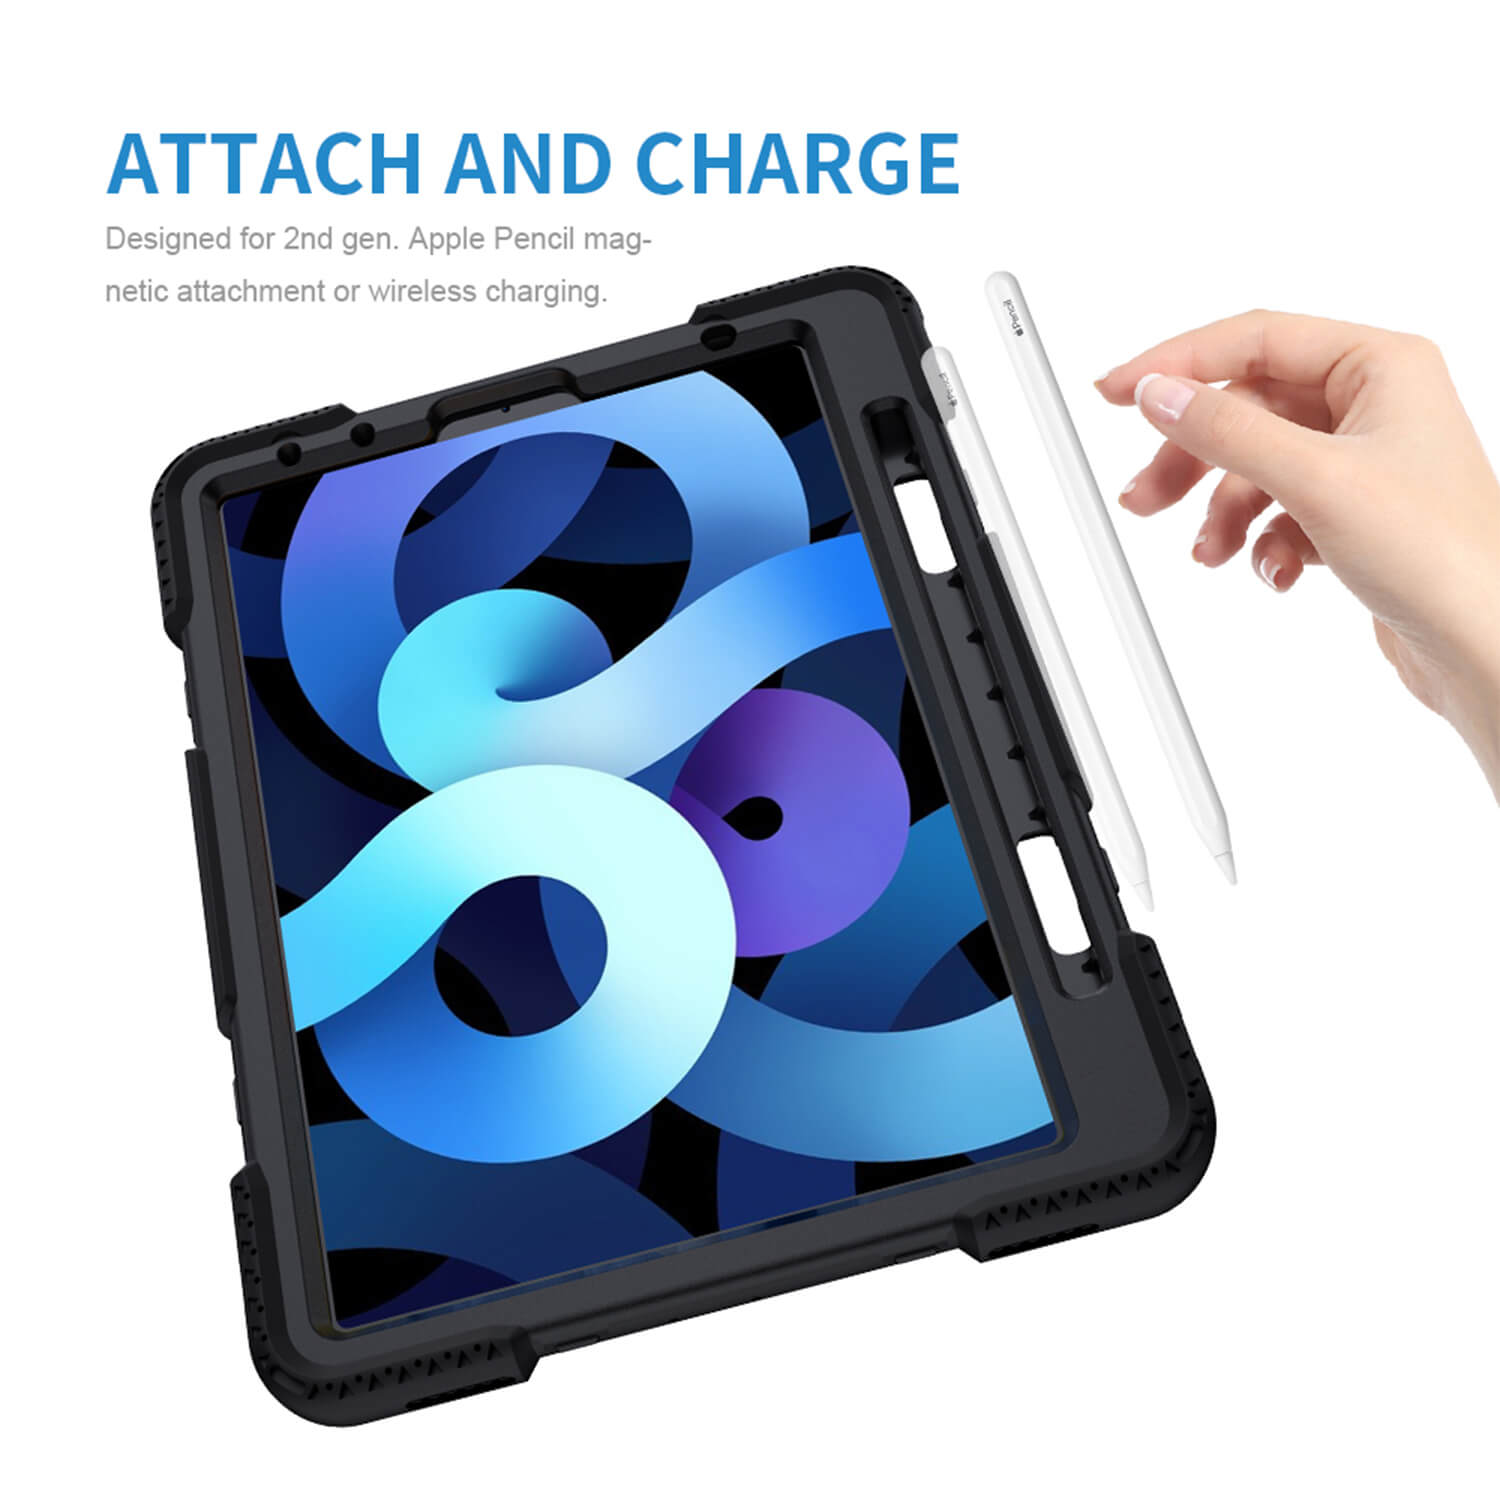 Tough On iPad Air 5 / Air 4 10.9" Case Rugged Protection Black